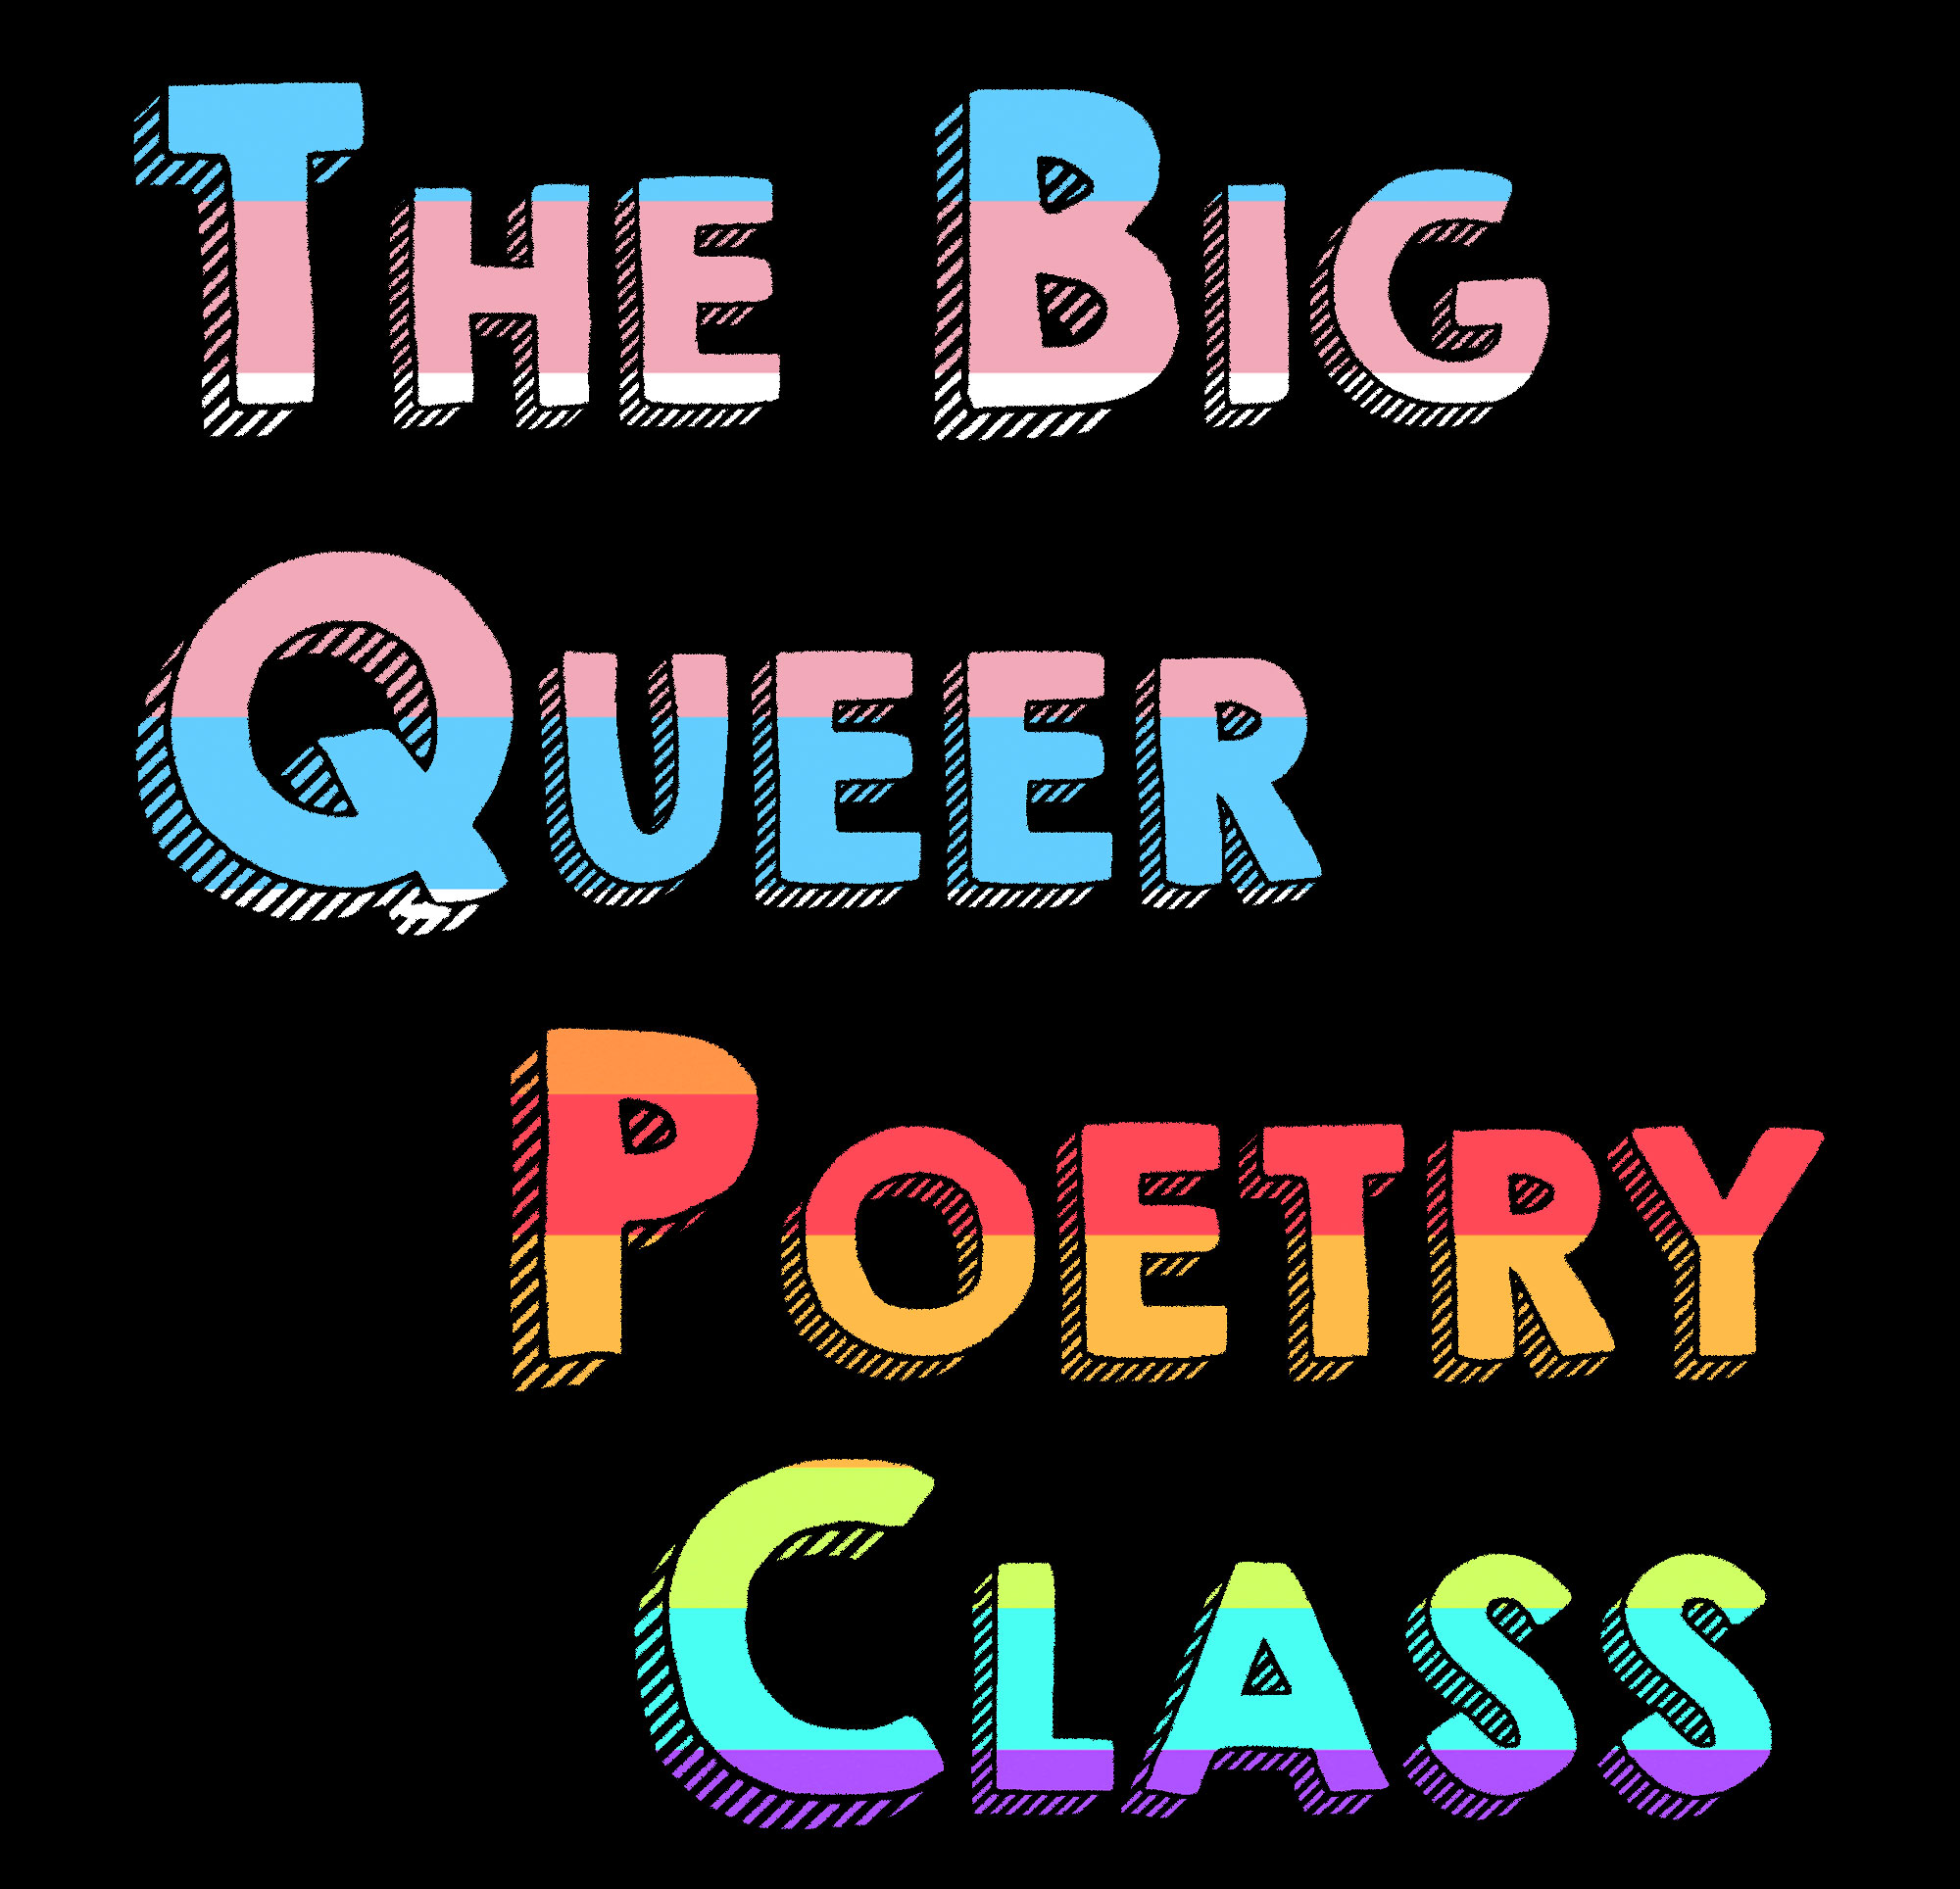 The Big Queer Poetry Class